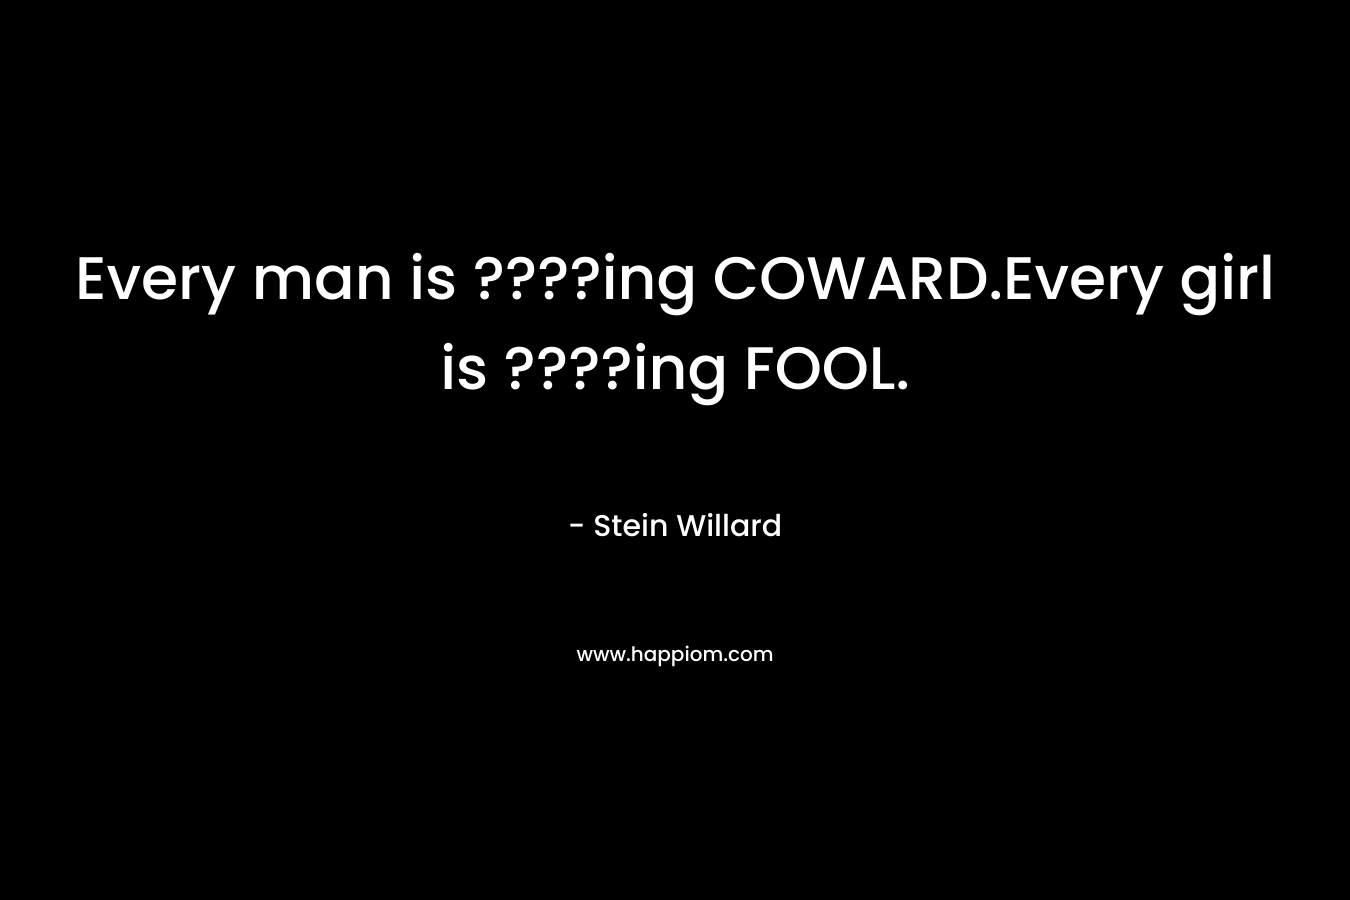 Every man is ????ing COWARD.Every girl is ????ing FOOL.